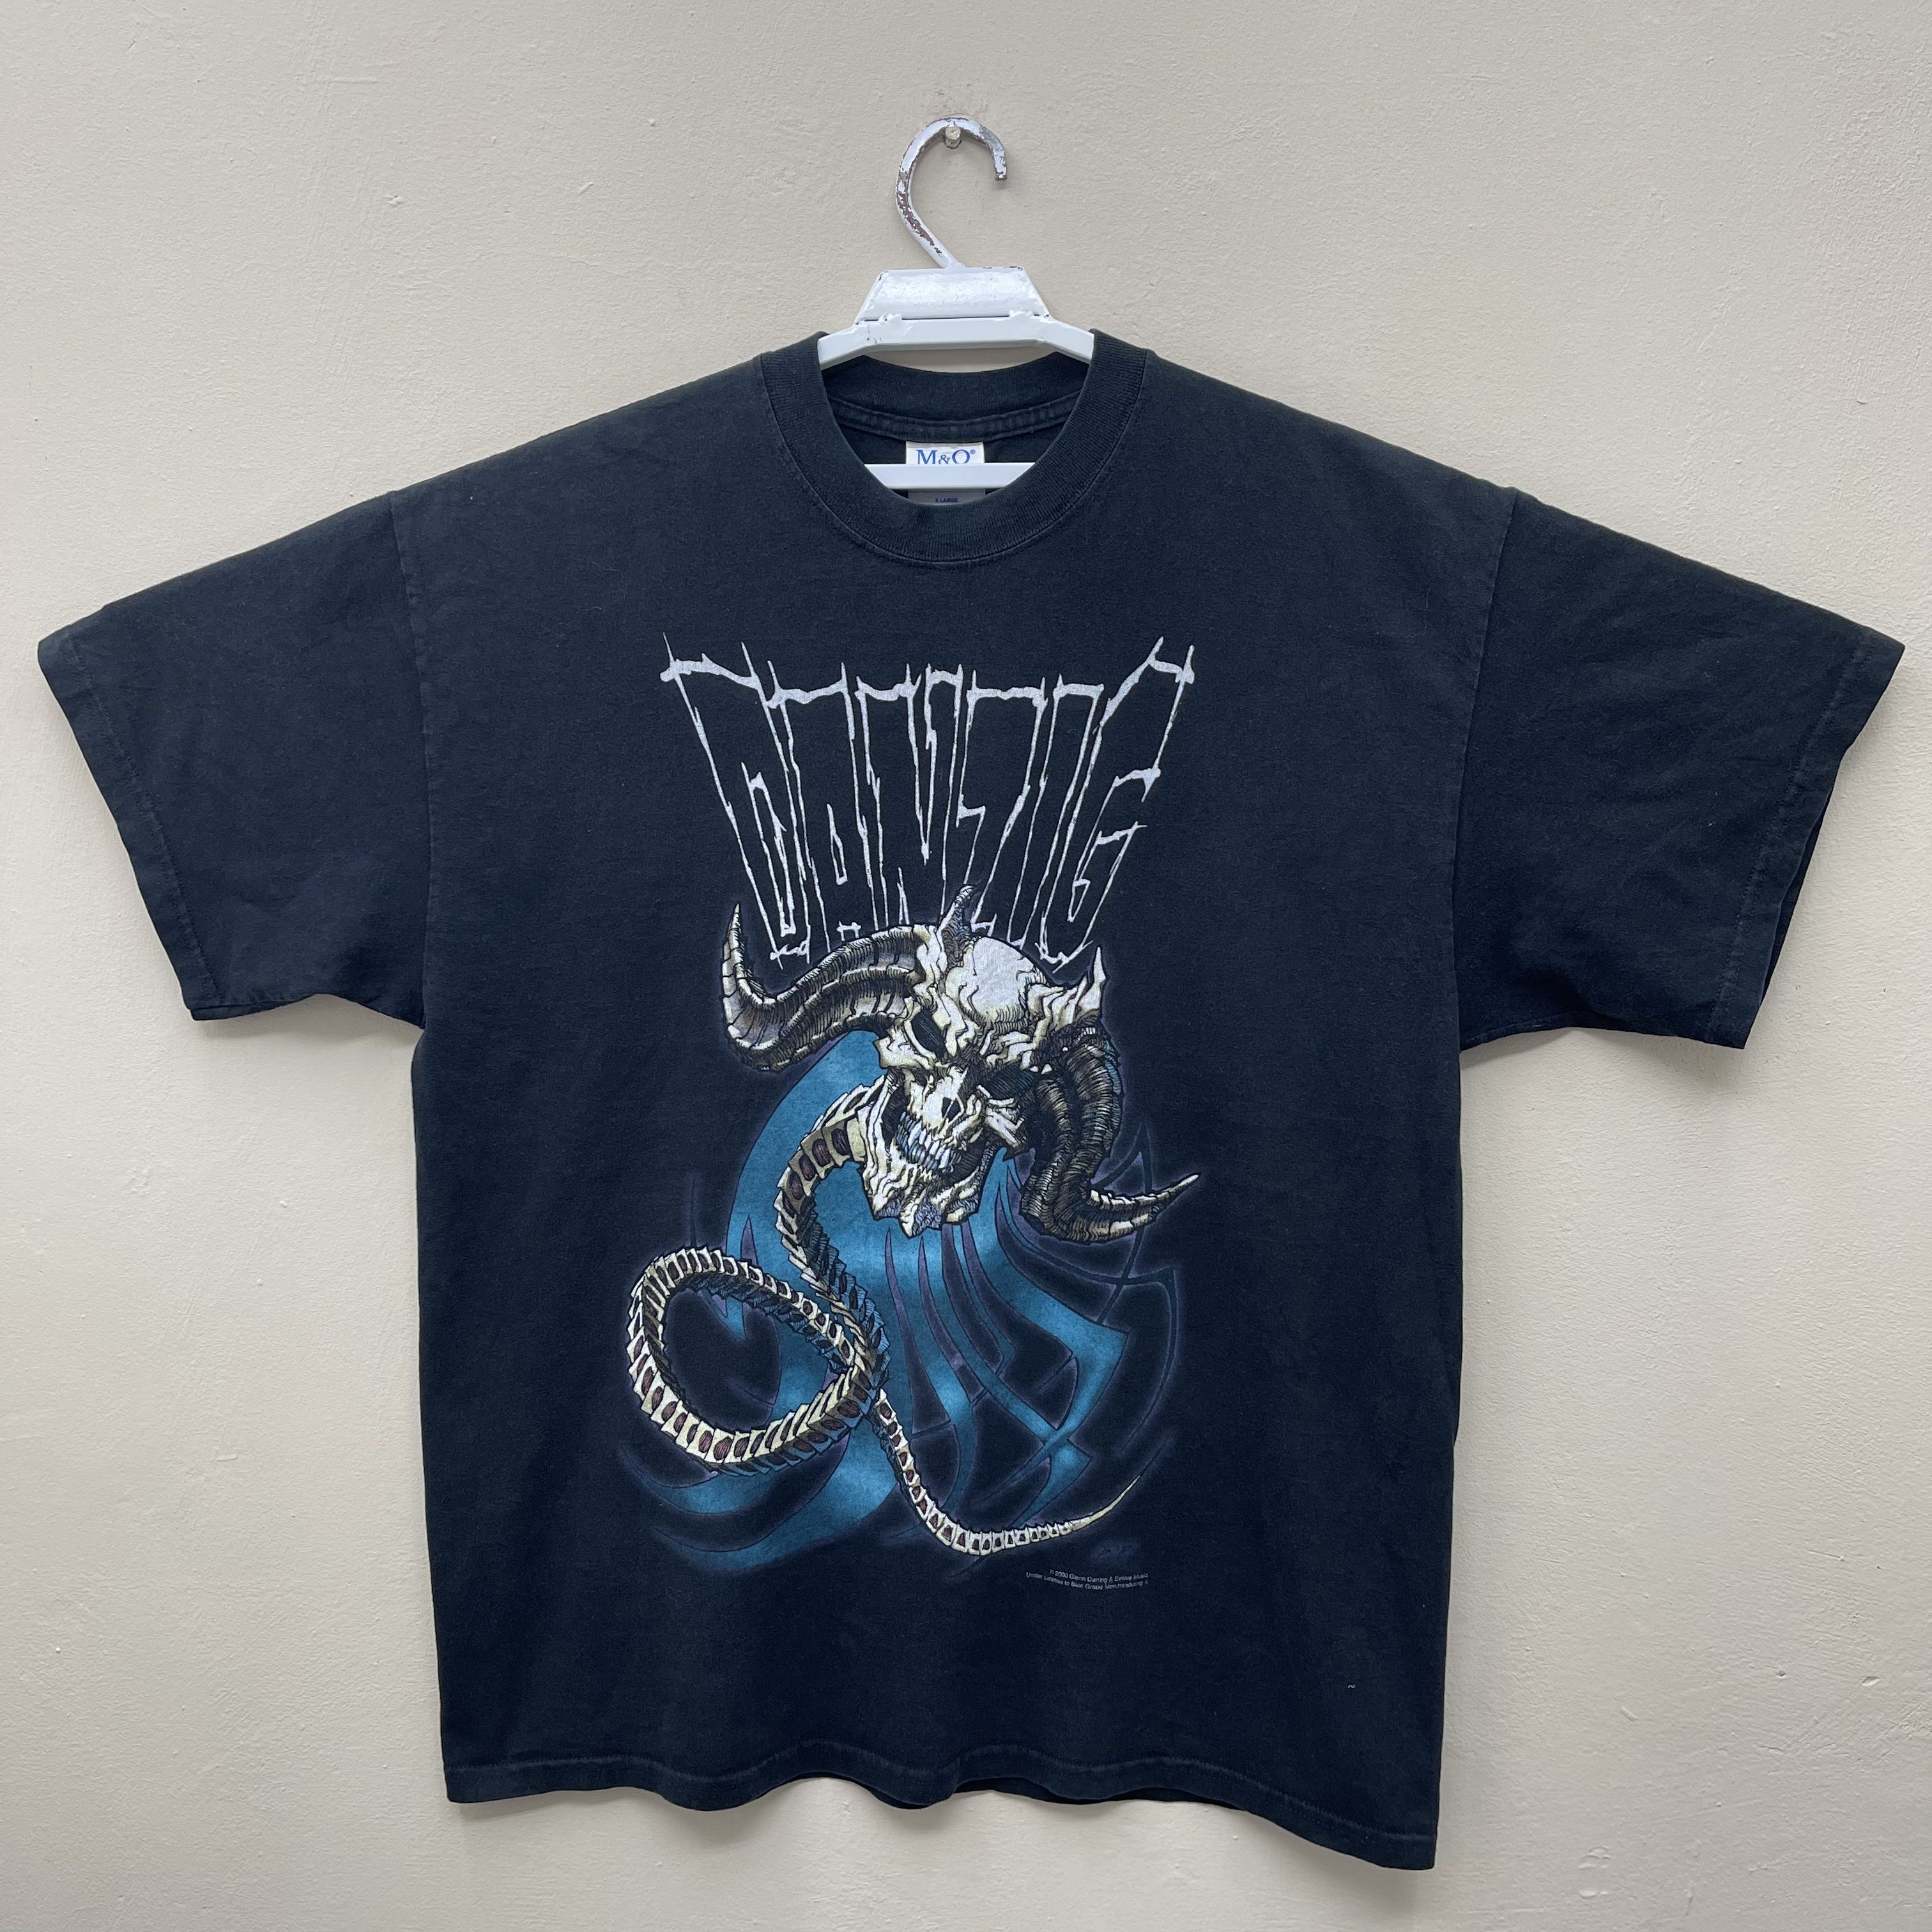 Vintage 2000 Danzig Shirt Concert Shirt Band Tee Danzig Tee The Misfits Shirt Misfits Tee DANZIG Shirt Size Xlarge - 1